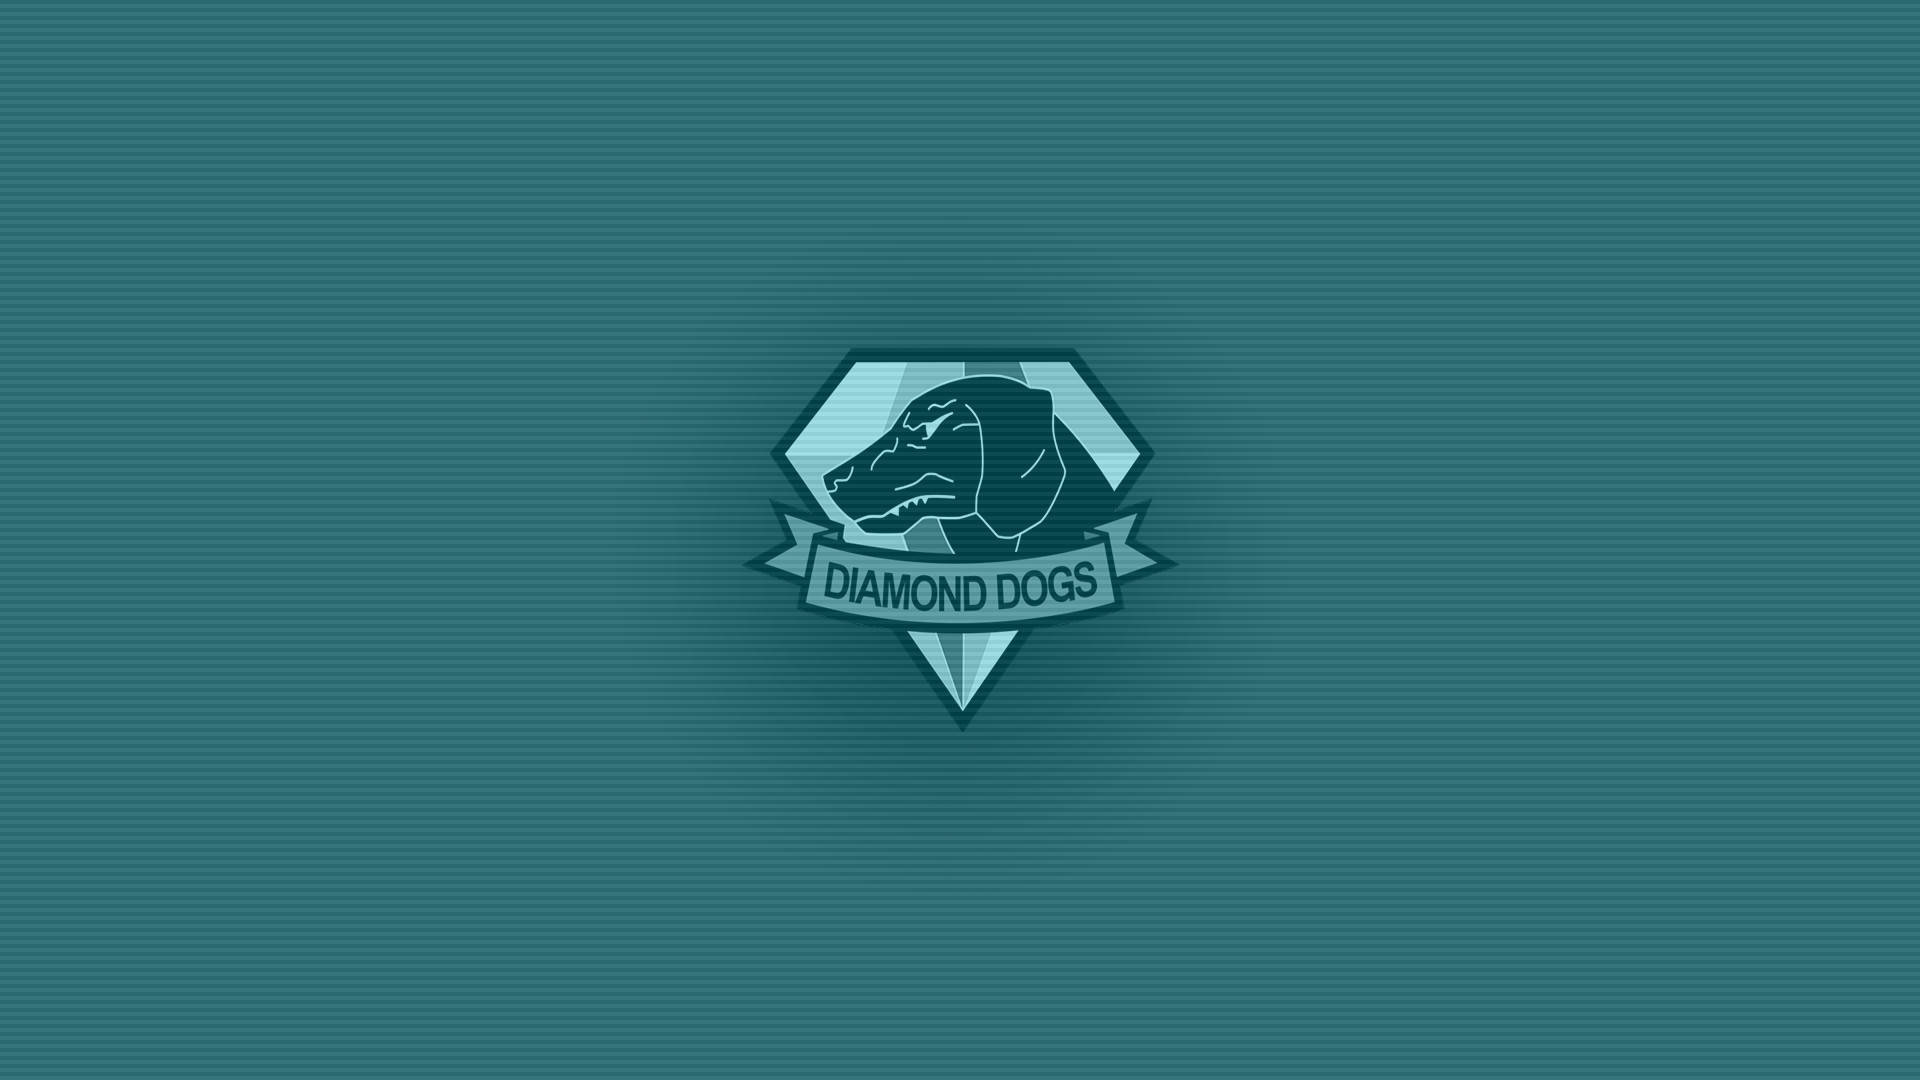 Diamonddogs Logo 1920 X 1080 Einfach Wallpaper